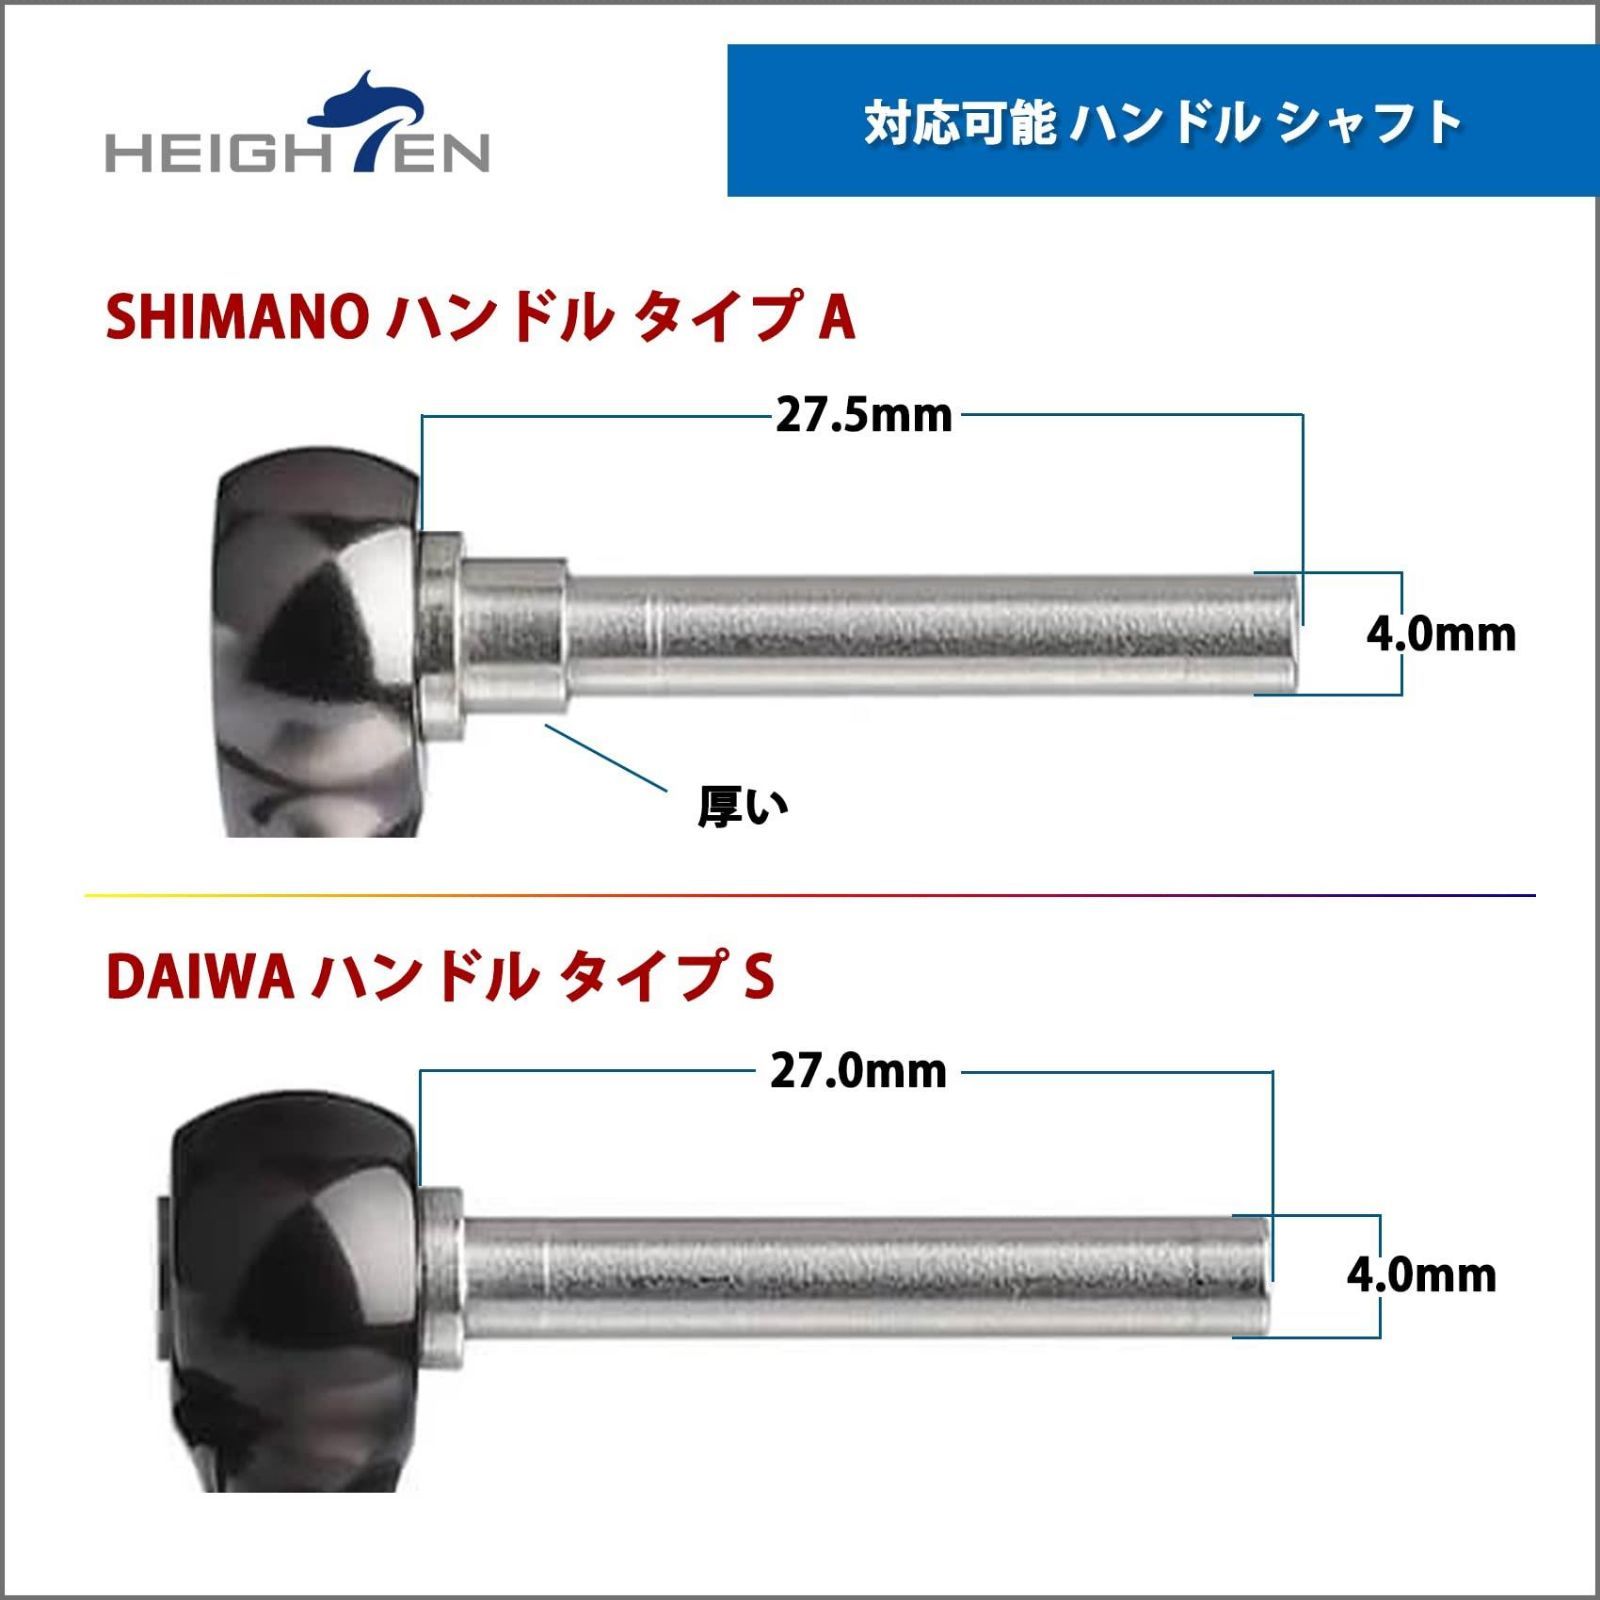 35mm_シルバー/ブルー HEIGHTEN 35mm パワー リール ハンドル ノブ 6色 シマノ ダイワ 通用 (Shimano) Type A ( Daiwa) Type S 用 70航空アルミ製 Harmer Series V2.0 (35mm